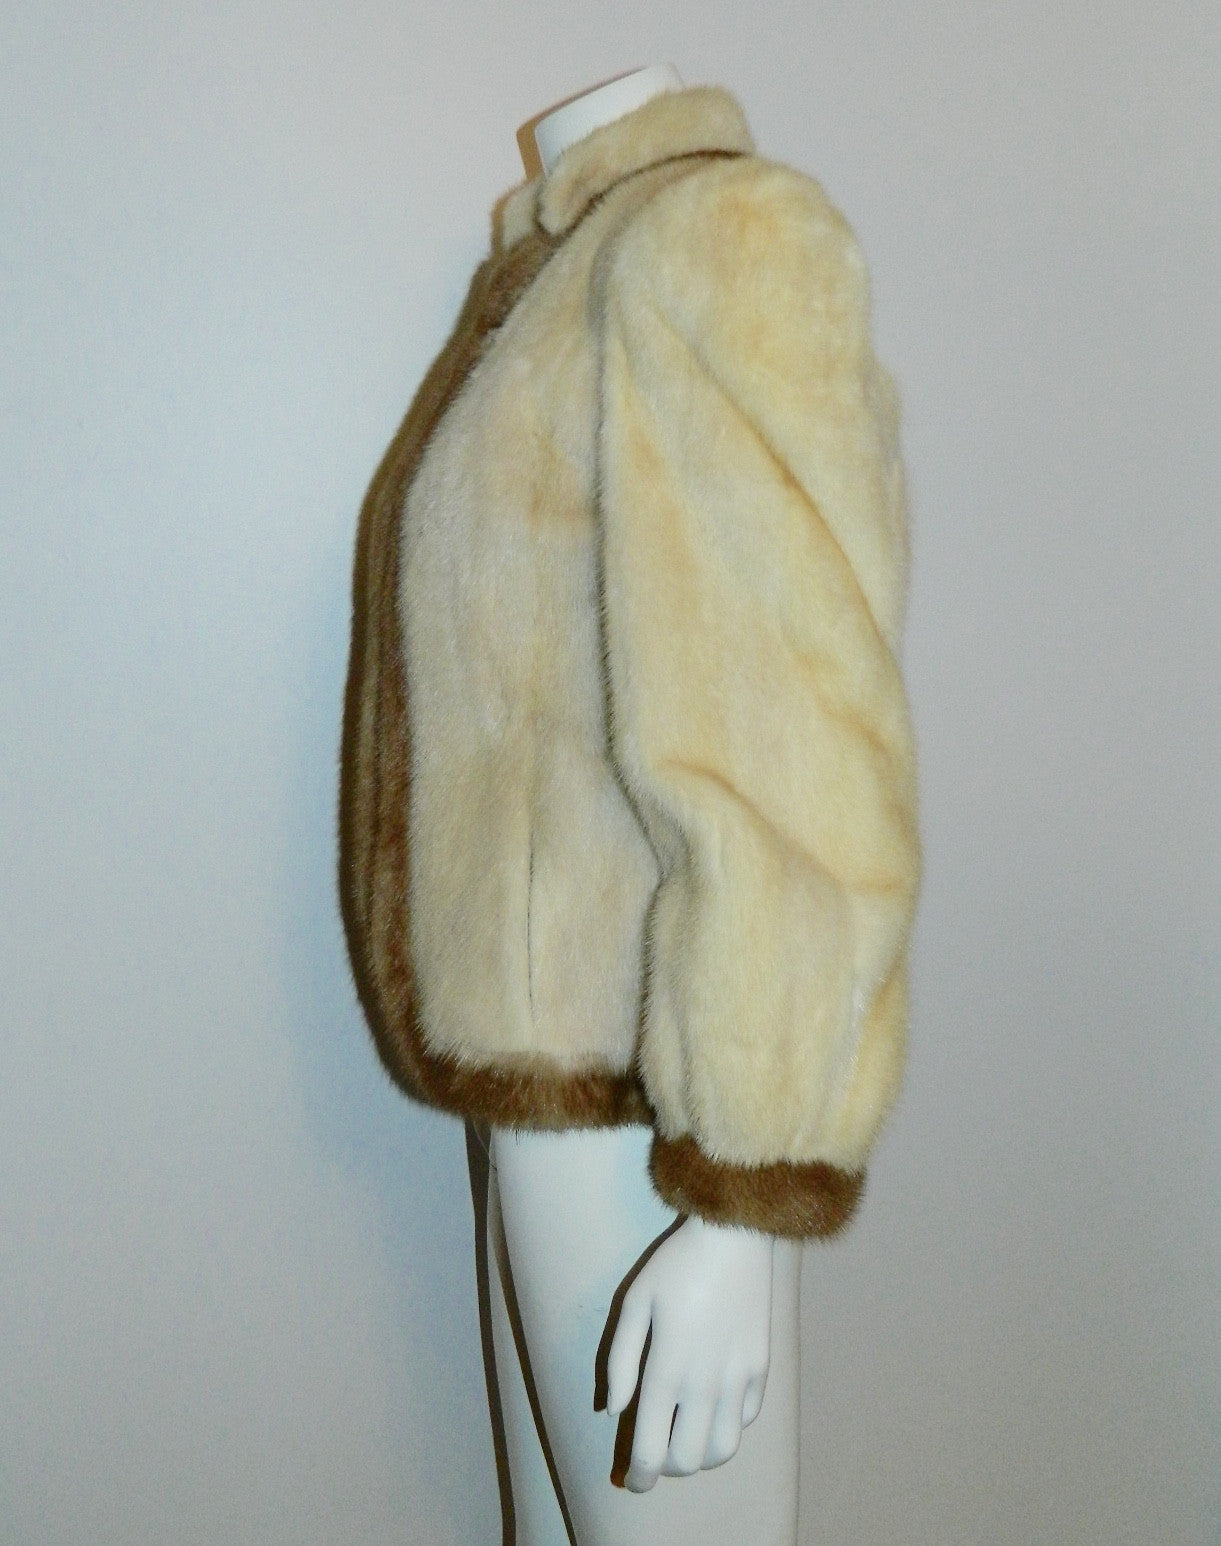 1970s mink jacket / vintage short coat pearl mink Palomino trim XS - S